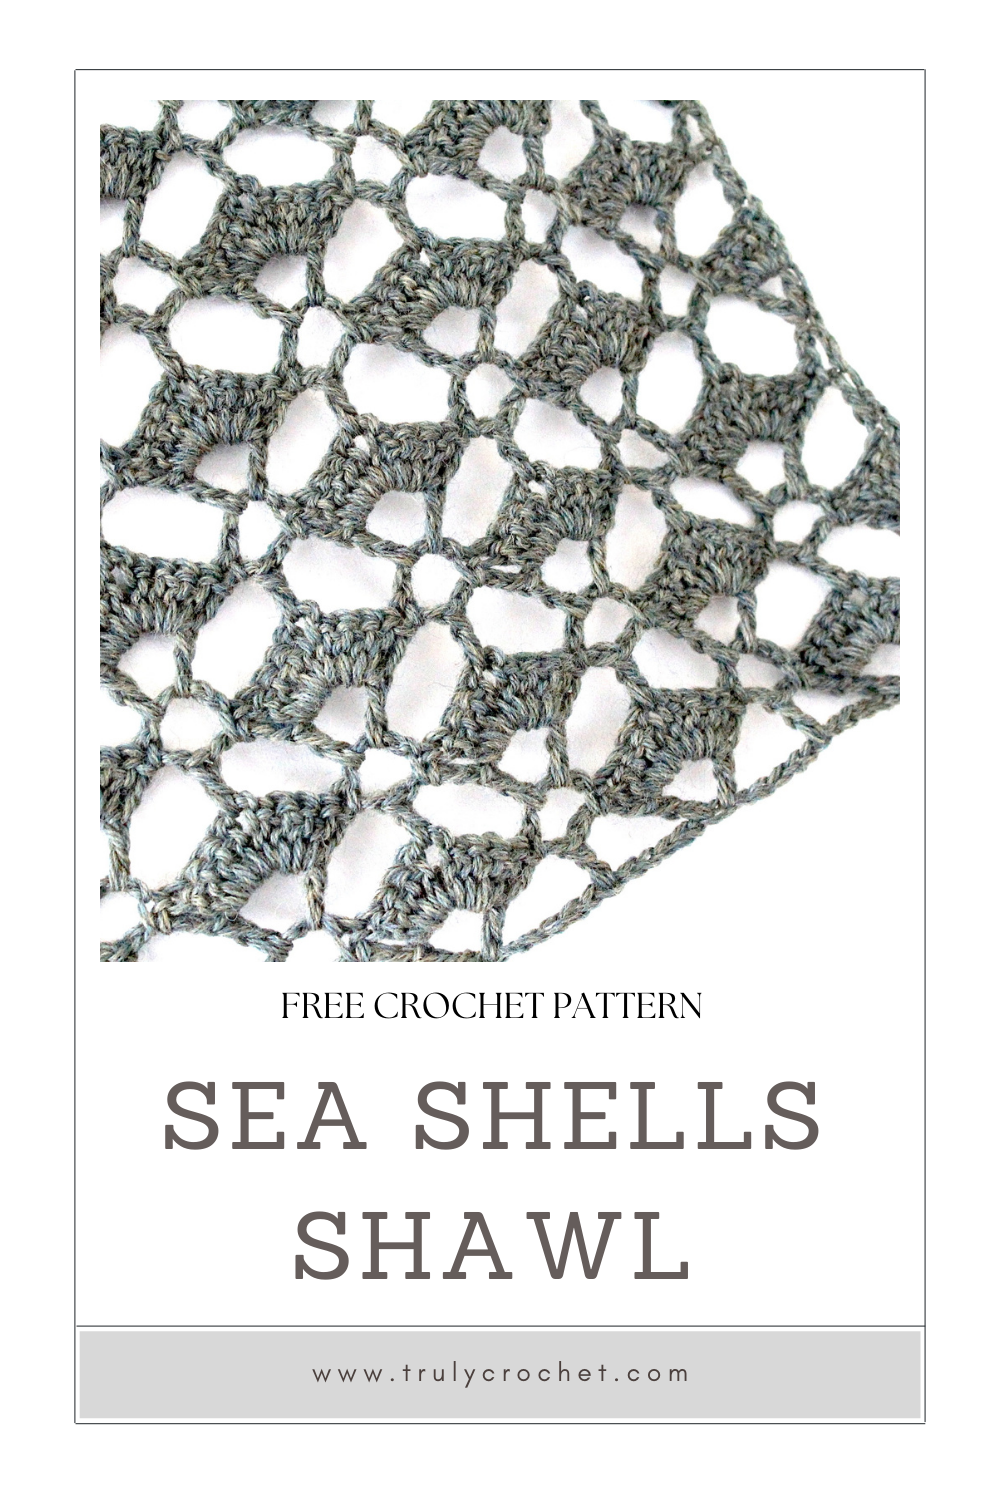 Sea Shells Shawl Pinterest Pin